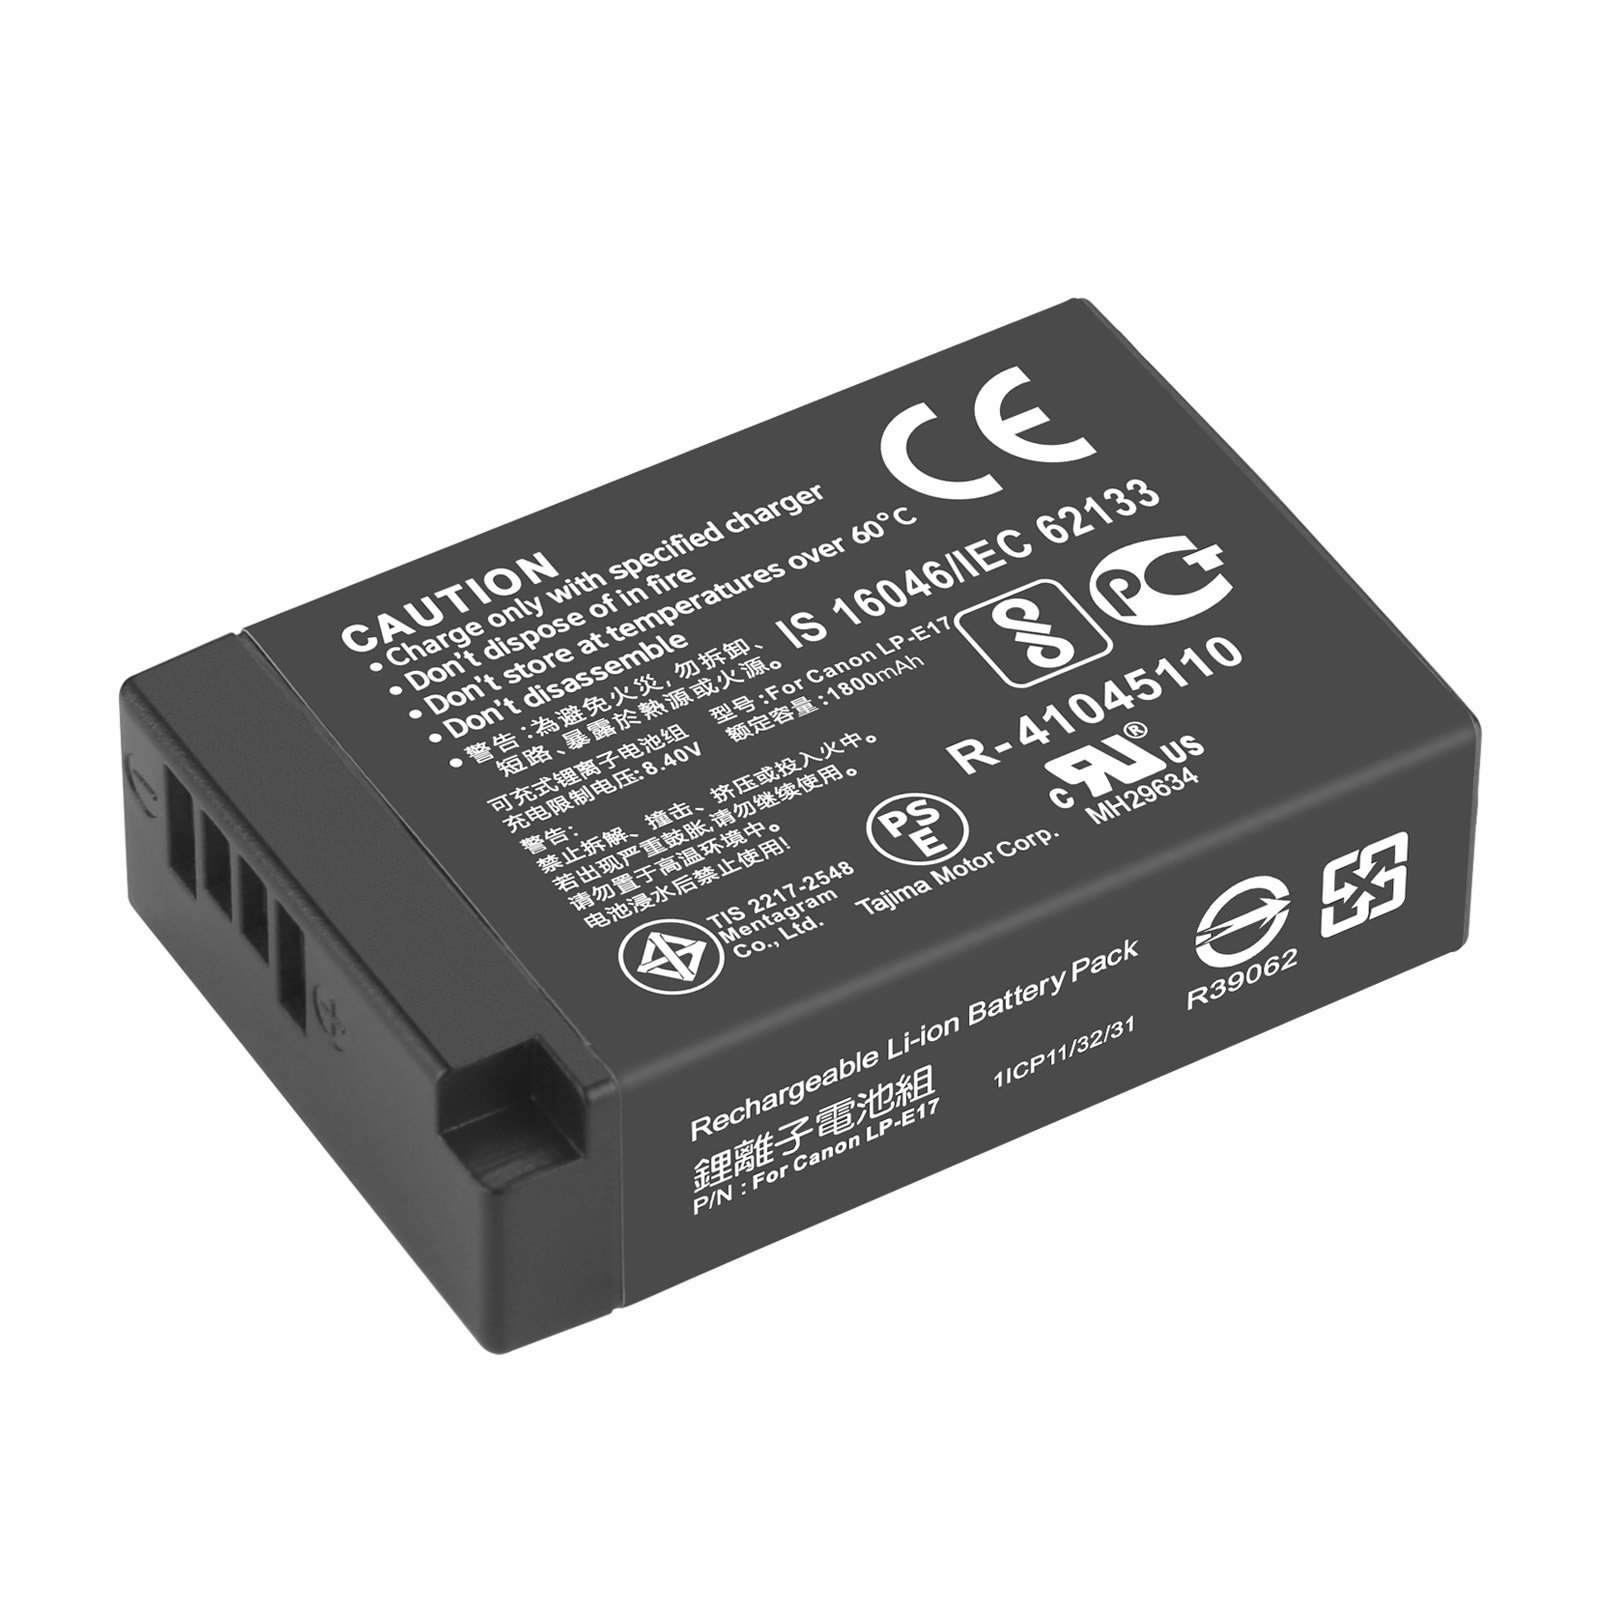 LPE17 LP E17 LP-E17 E17 Battery Type-c Charging for Canon EOS RP 200 250D M3 M5 M6 750D 760D T6i T6s 800D 8000D 77D Kiss X8i